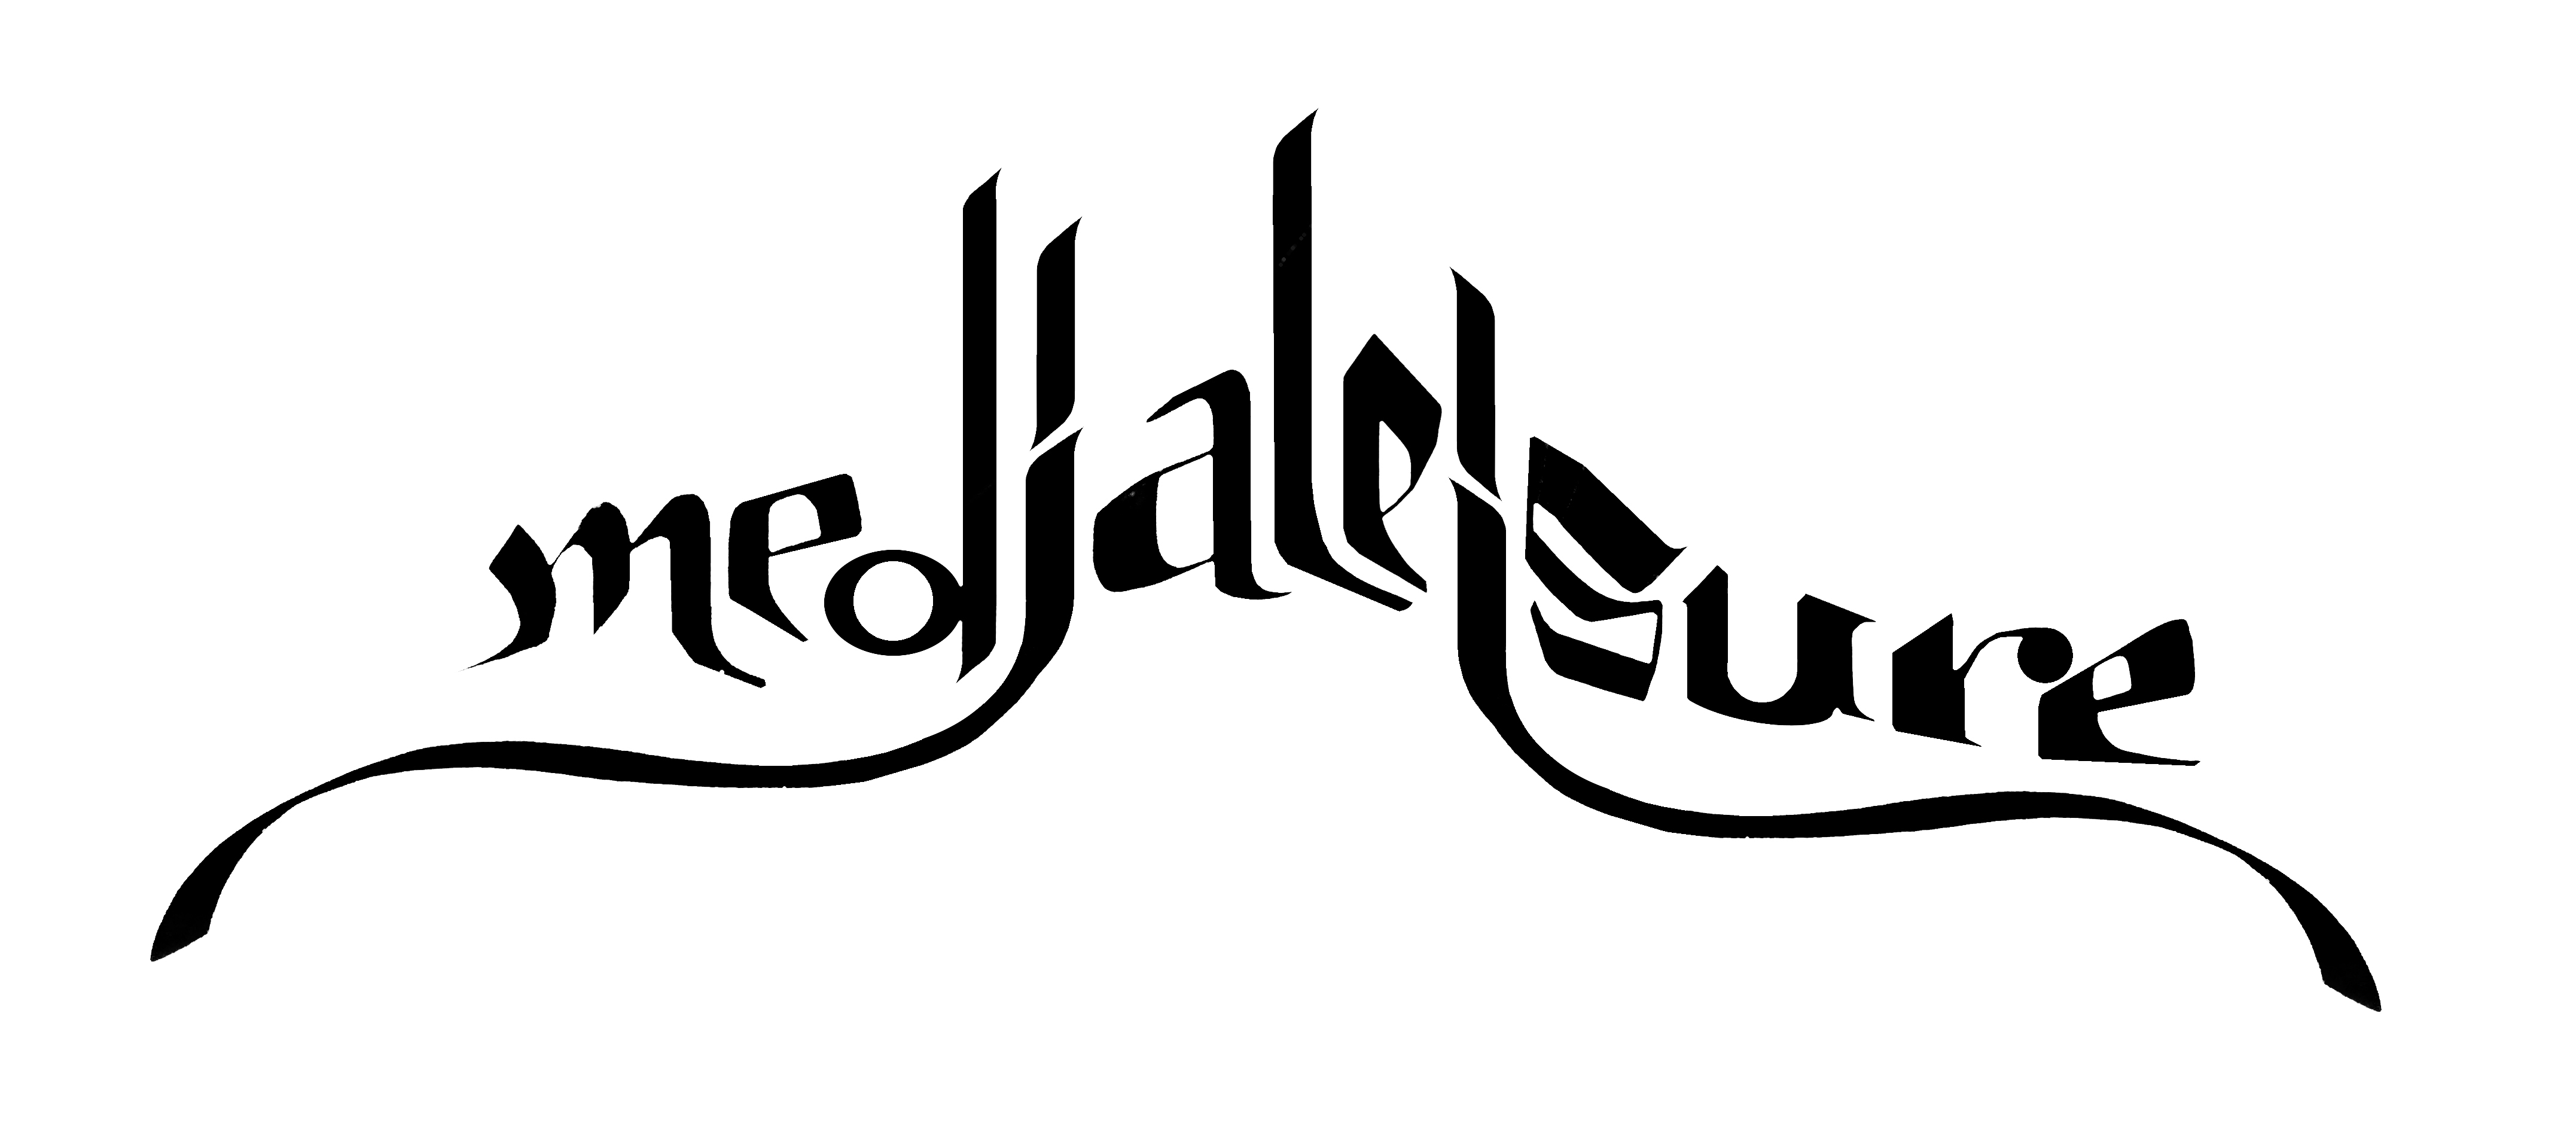 arabic font in english